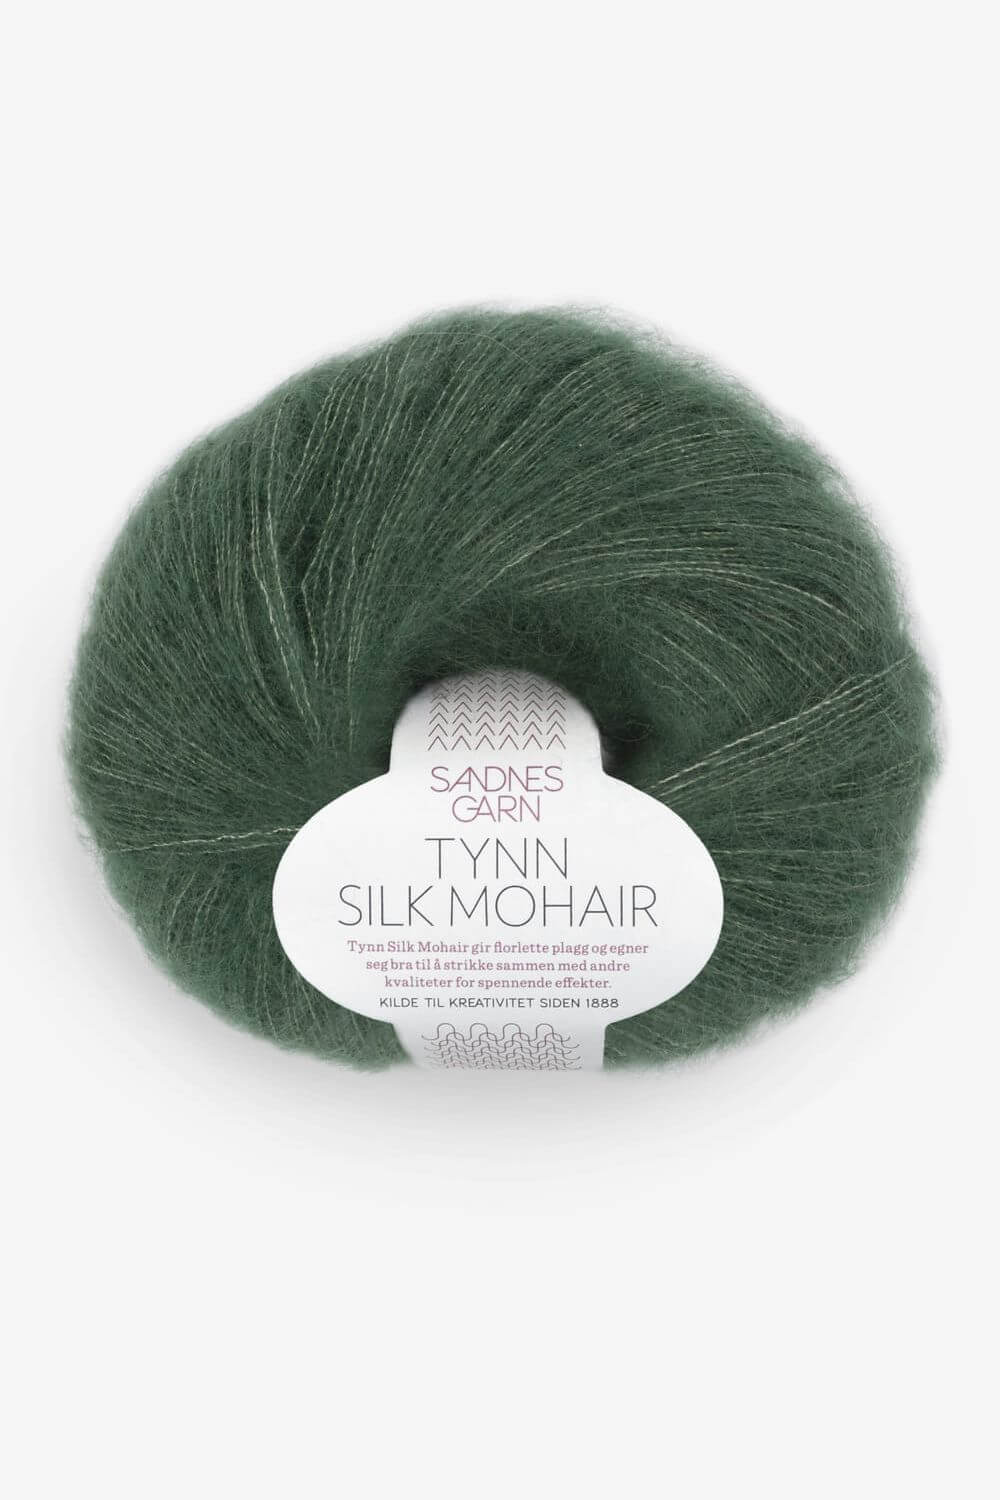 Sandnes Garn Tynn Silk Mohair Yarn - 9825 Sunny Lime at Jimmy